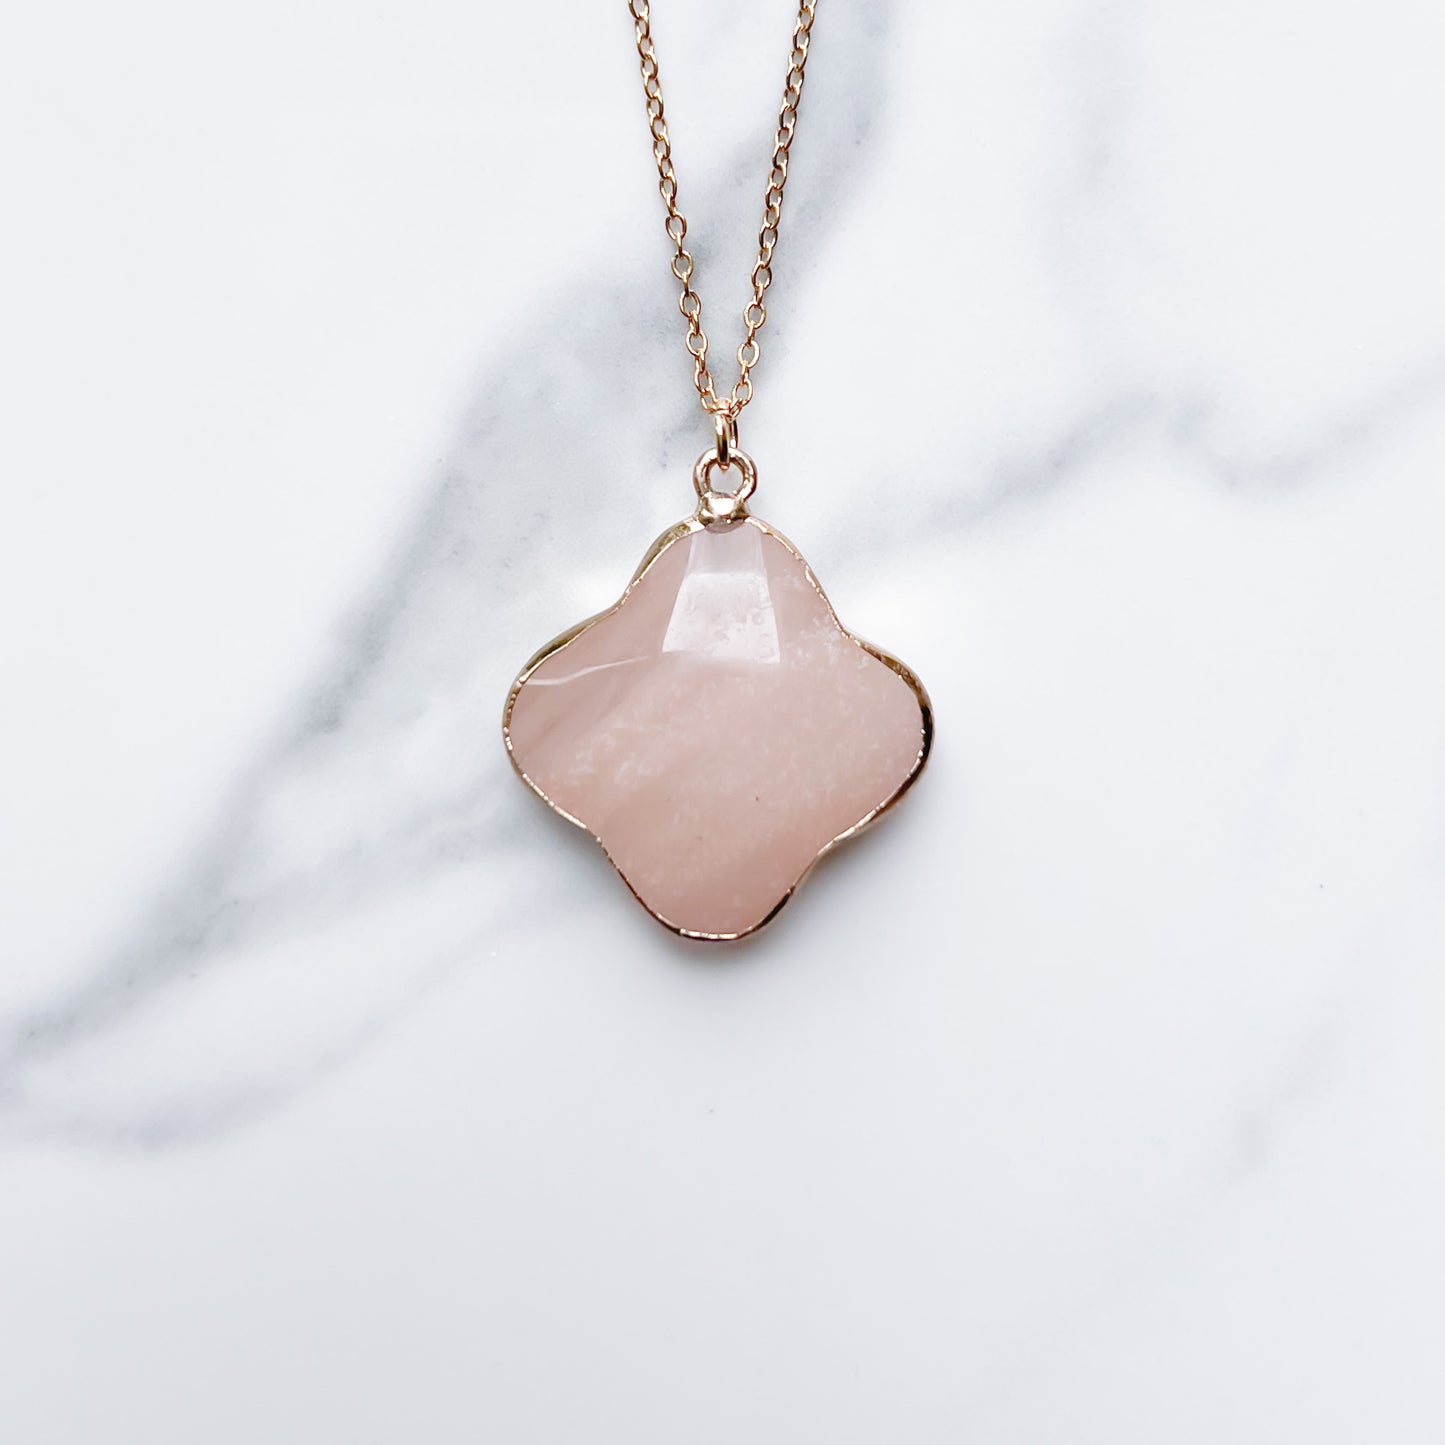 Semi precious healing gemstone clover shaped pendant necklace in pink adventurine